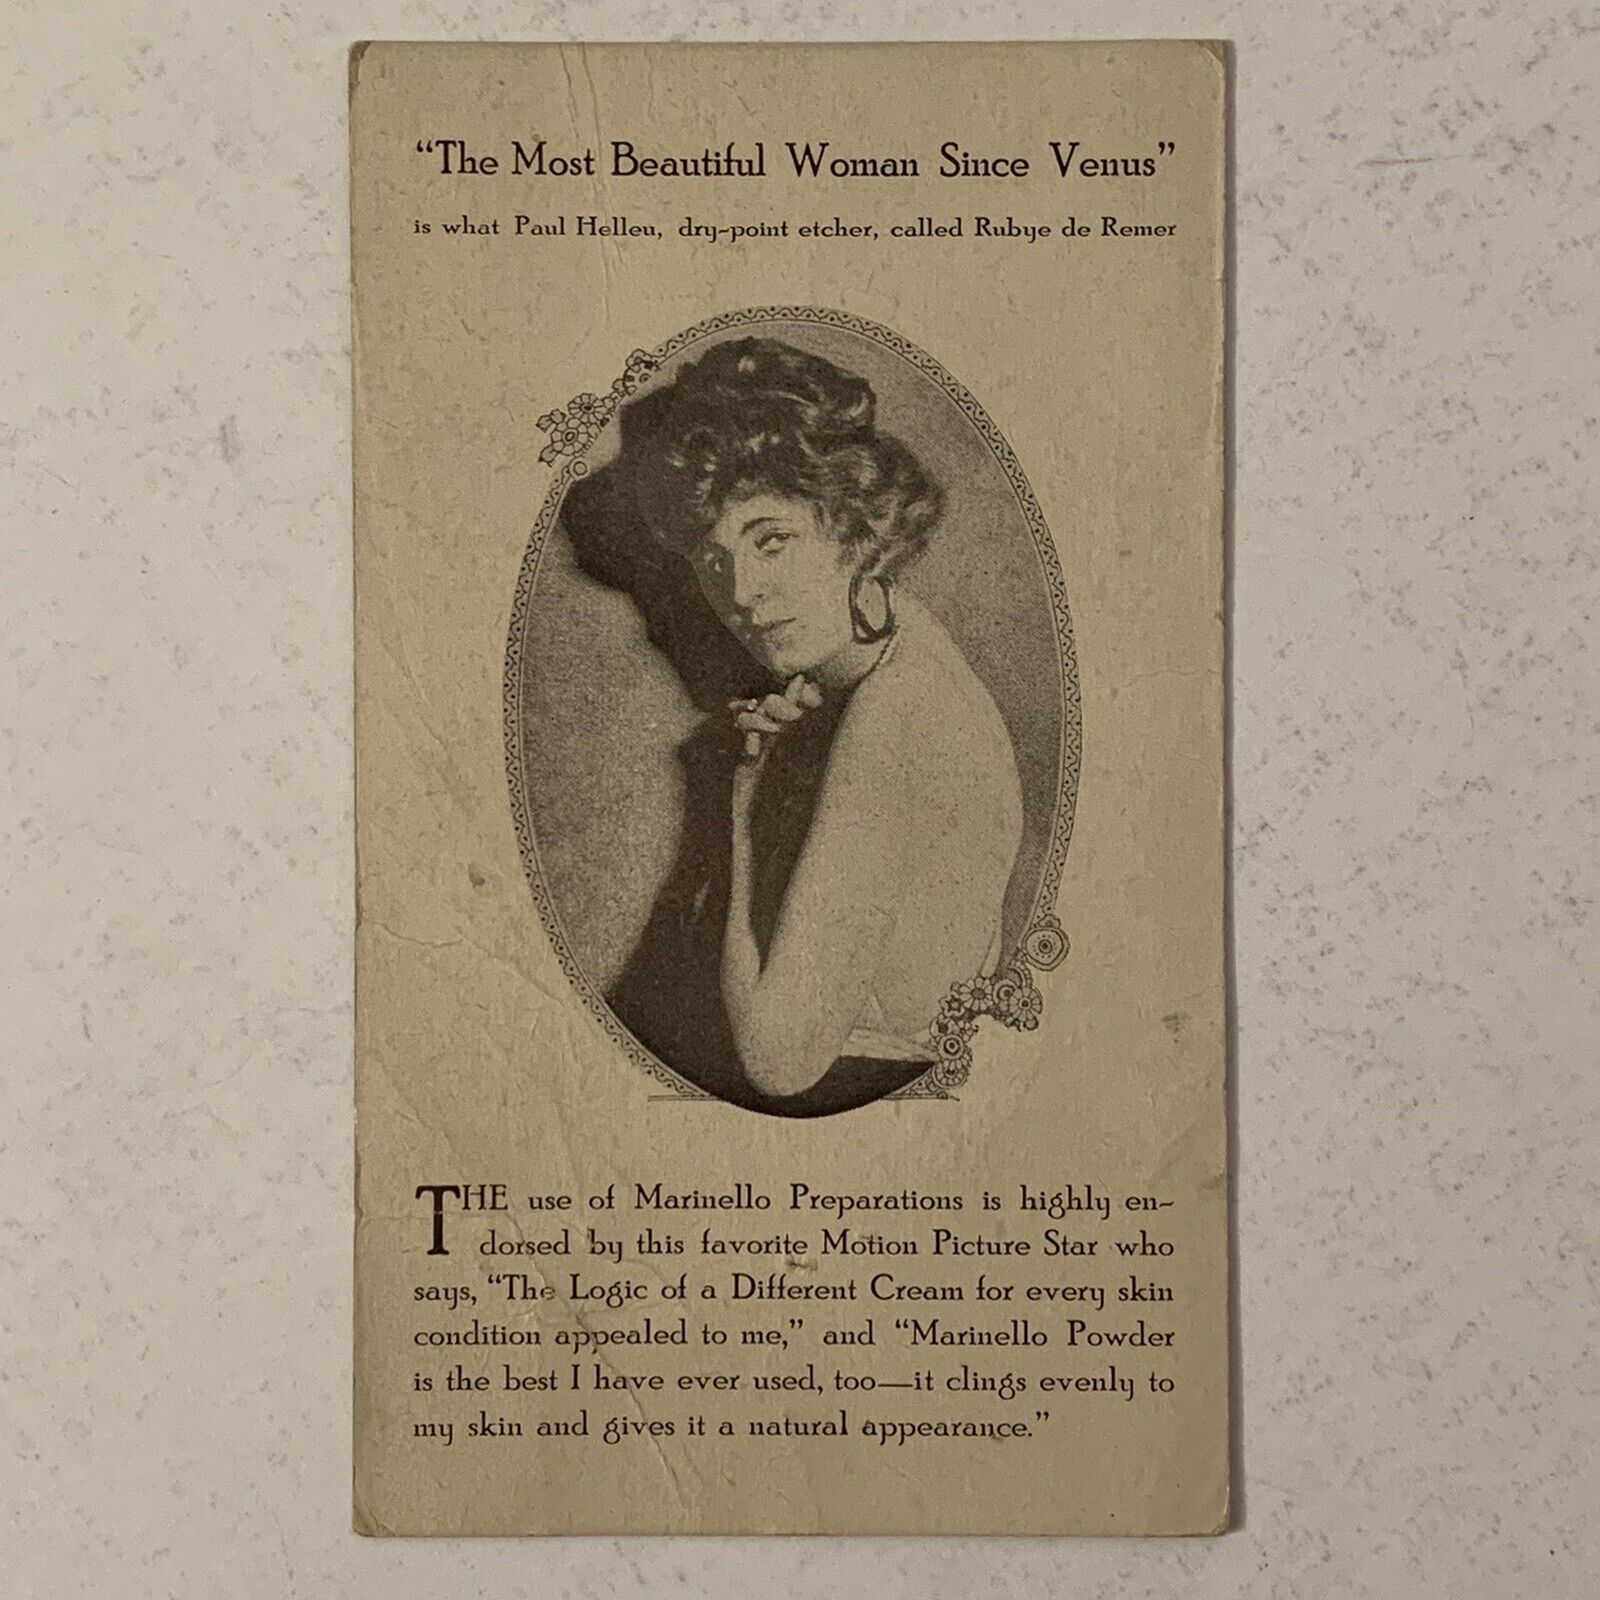 Vintage 1919 Rubye de Remer Marinello Preparations Postcard Advertising Makeup